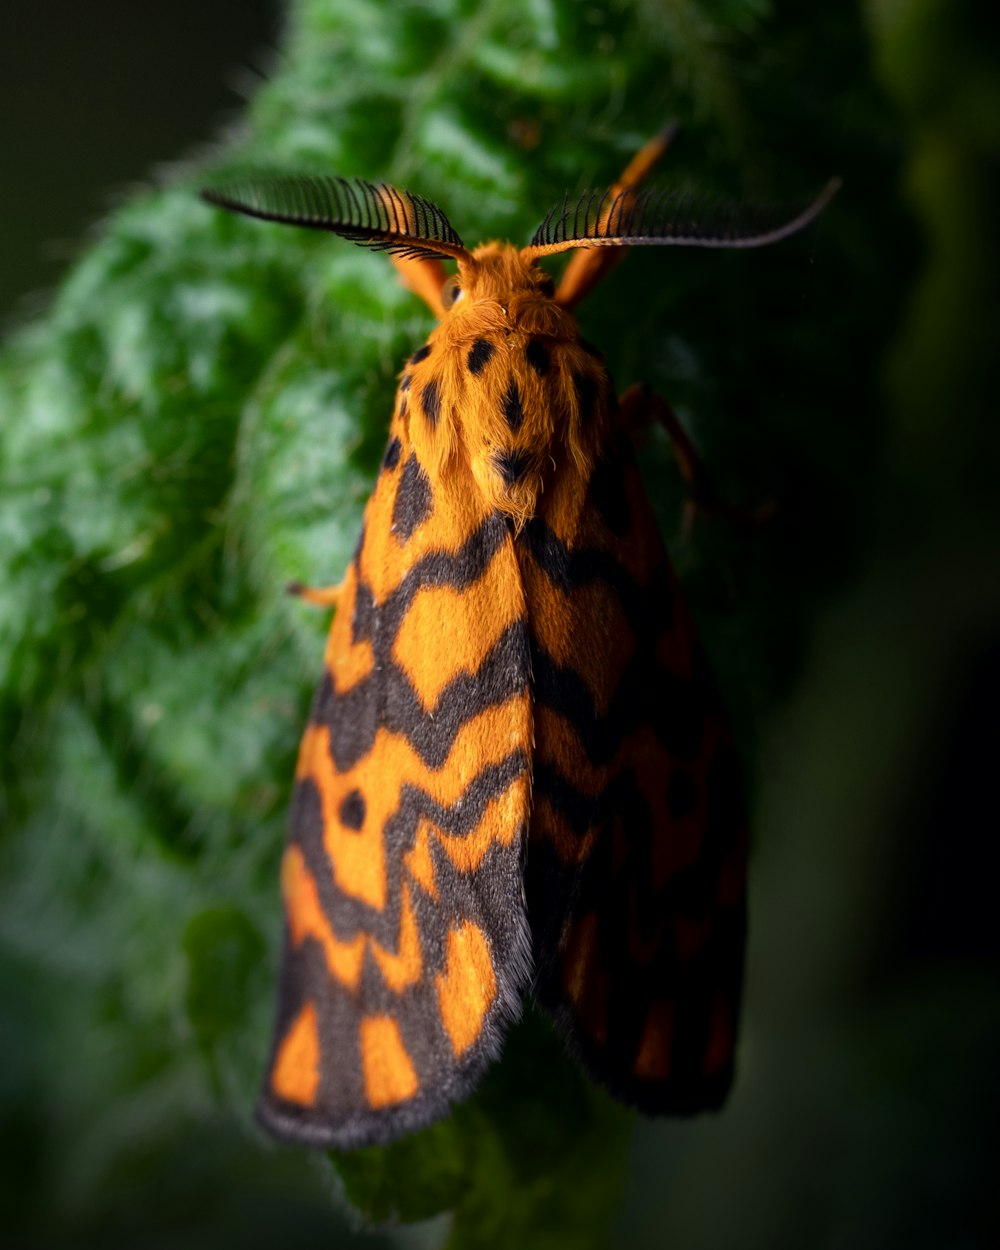 a close up of a moth on a leaf